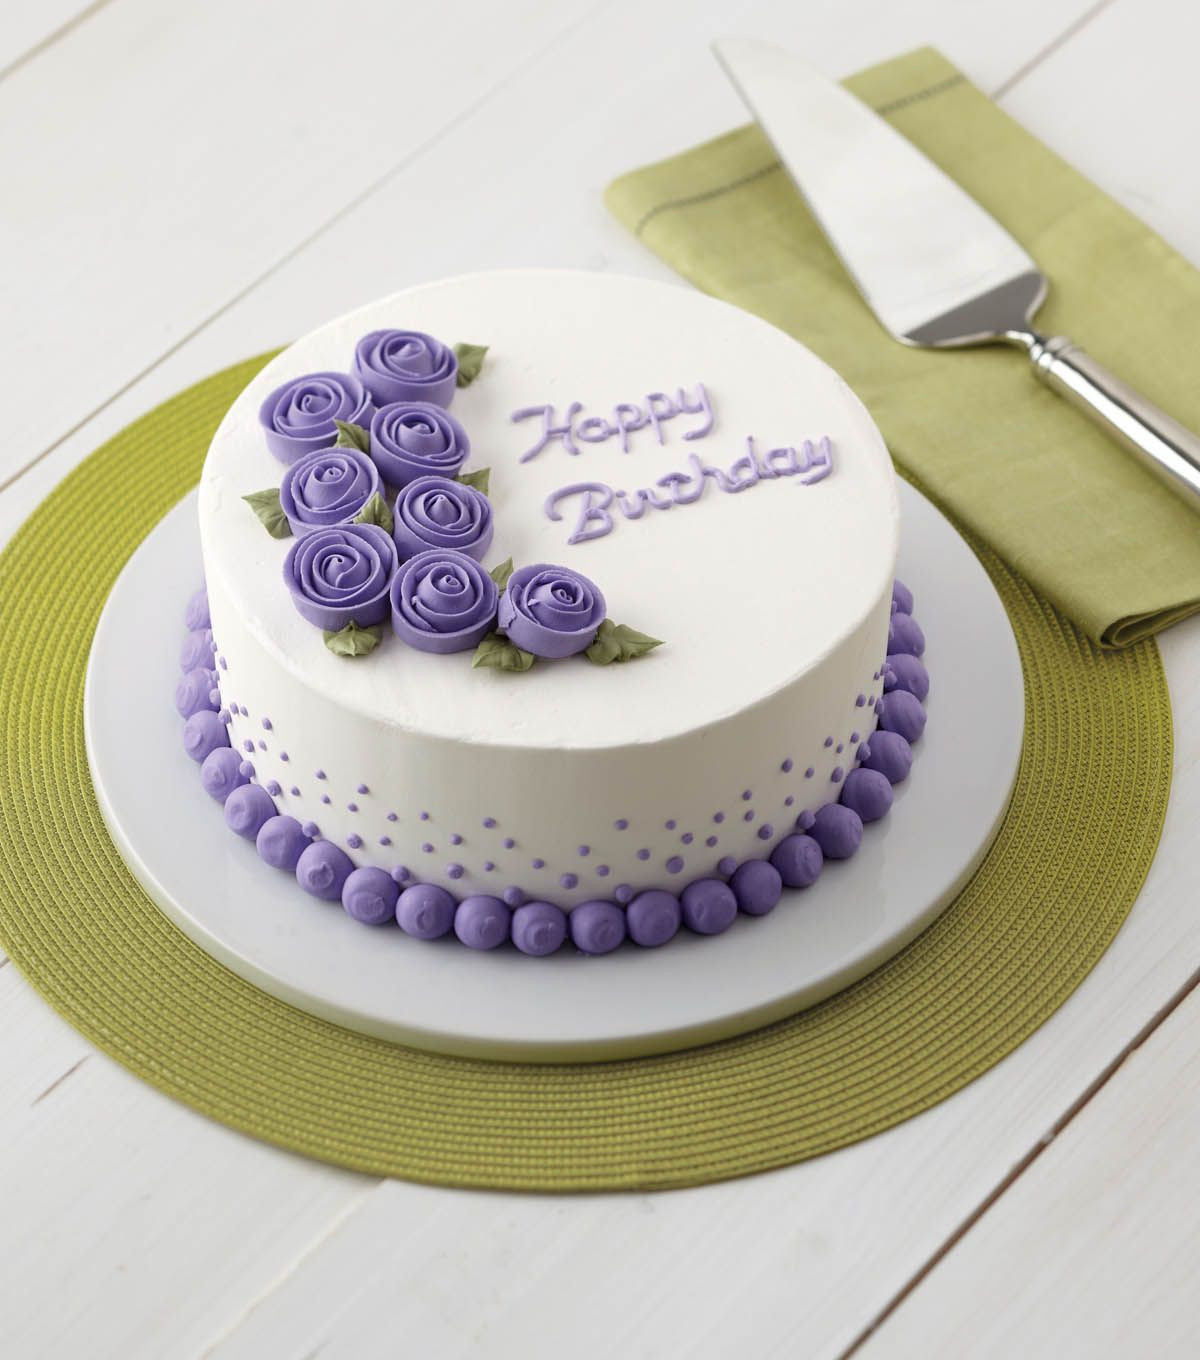 Wilton Birthday Cakes
 Vivid Violet Roses Cake Birthday Cake Wilton Cakes